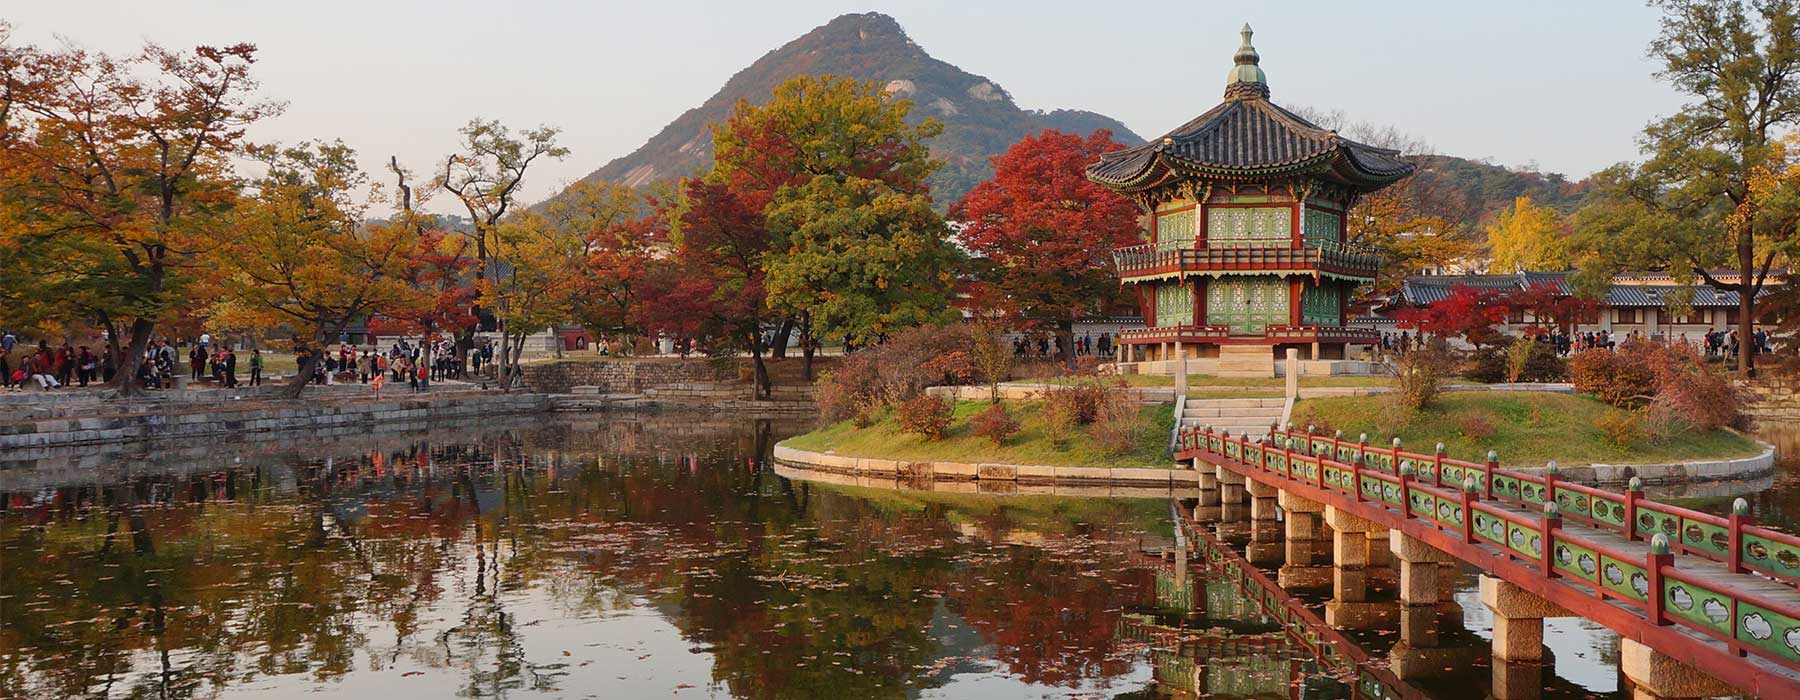 Gyeongbokgung Palace Hyangwonjeong Pavilion in Korea